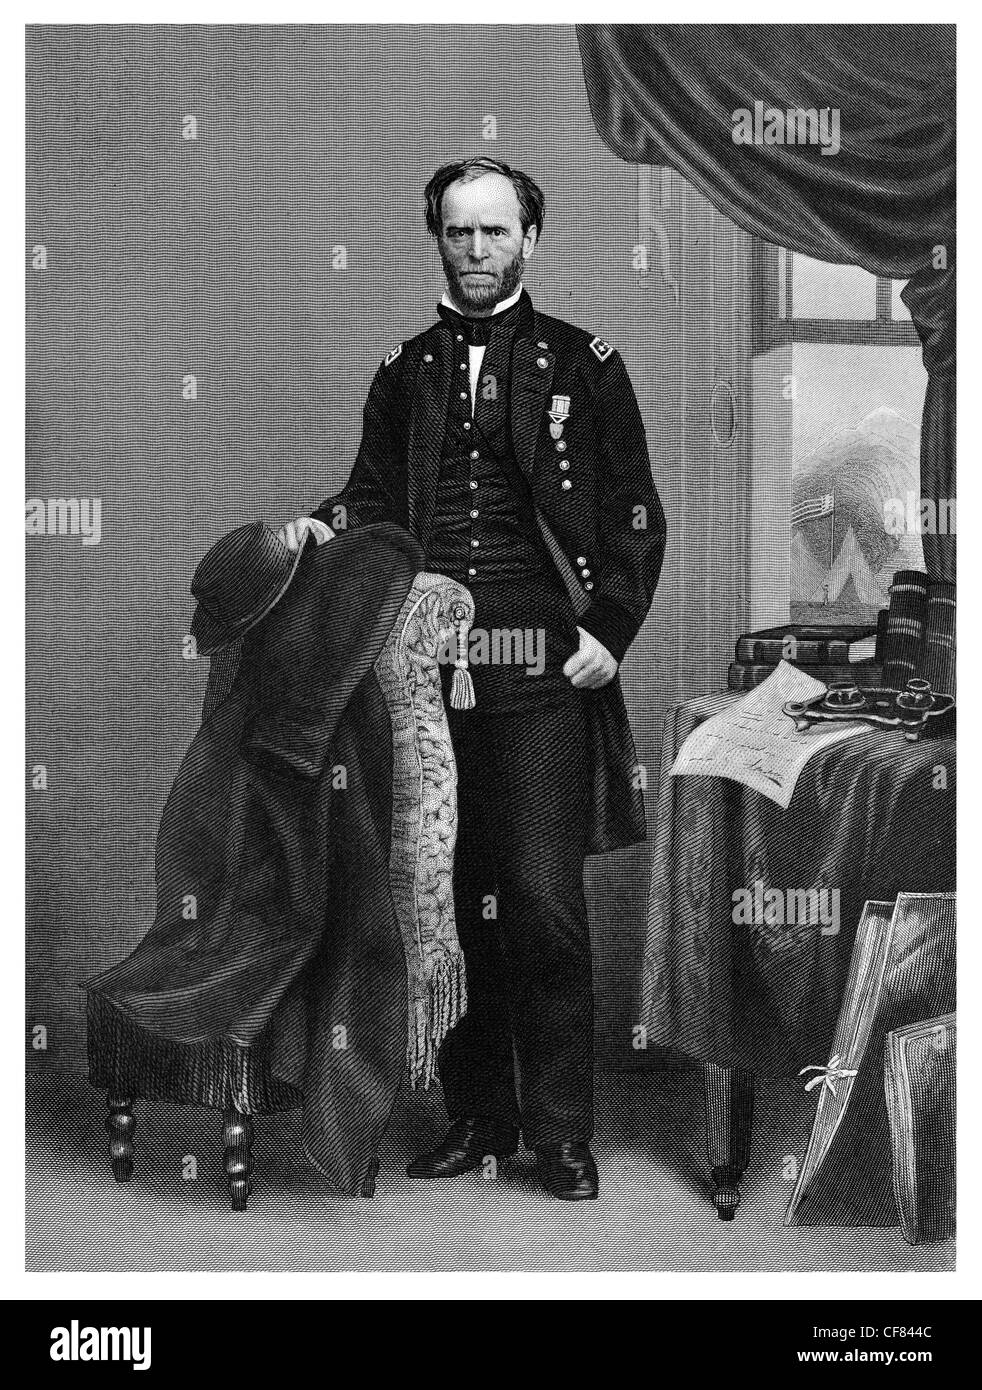 Union General William Tecumseh Sherman in Civil War uniform 1864 Stock Photo